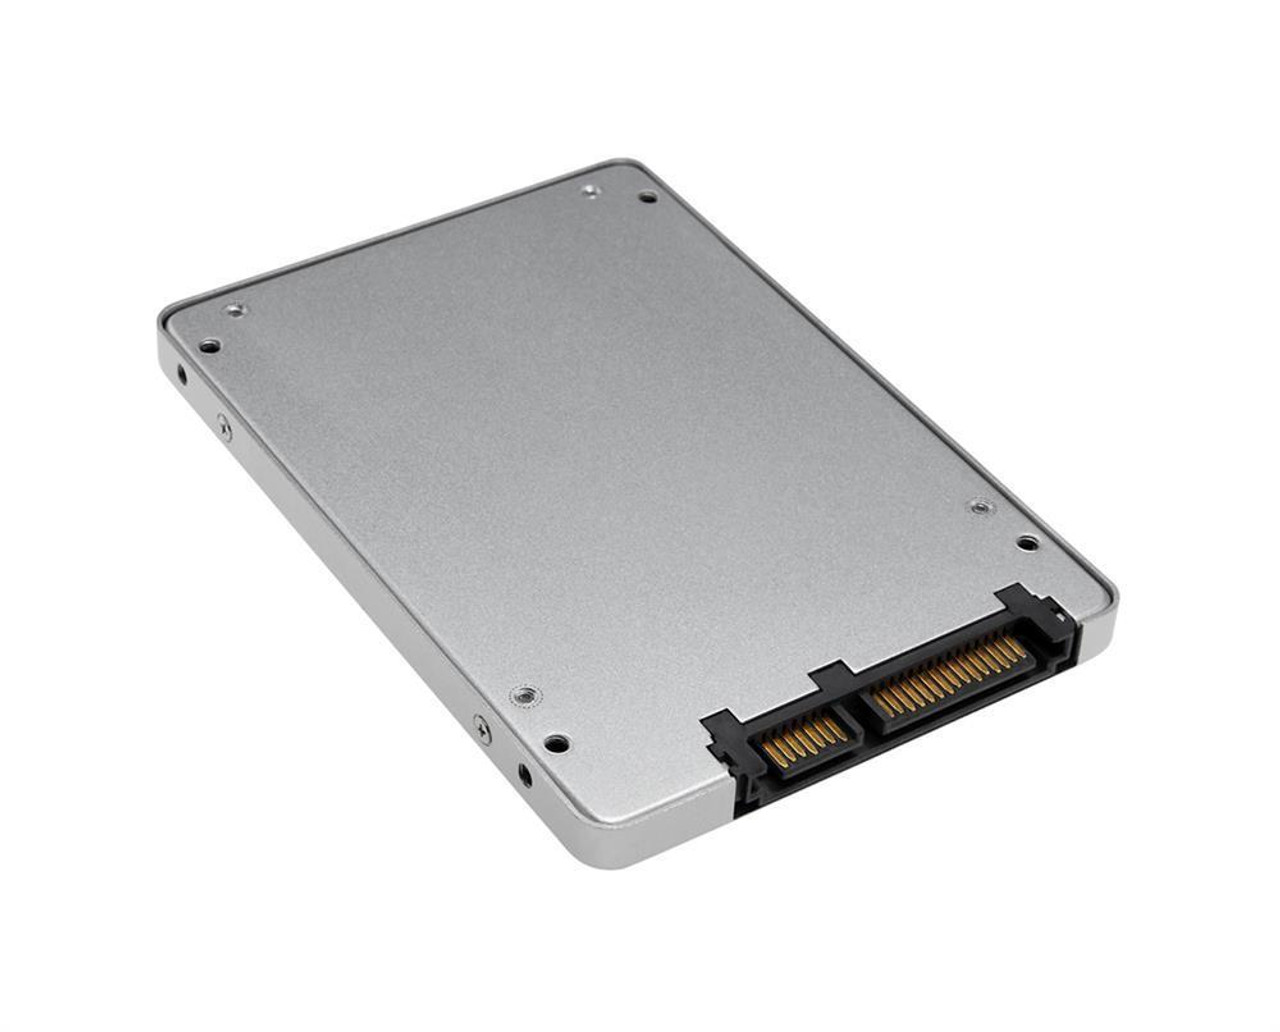 03B03-00010500 ASUS SSD 32GB Tfbga156